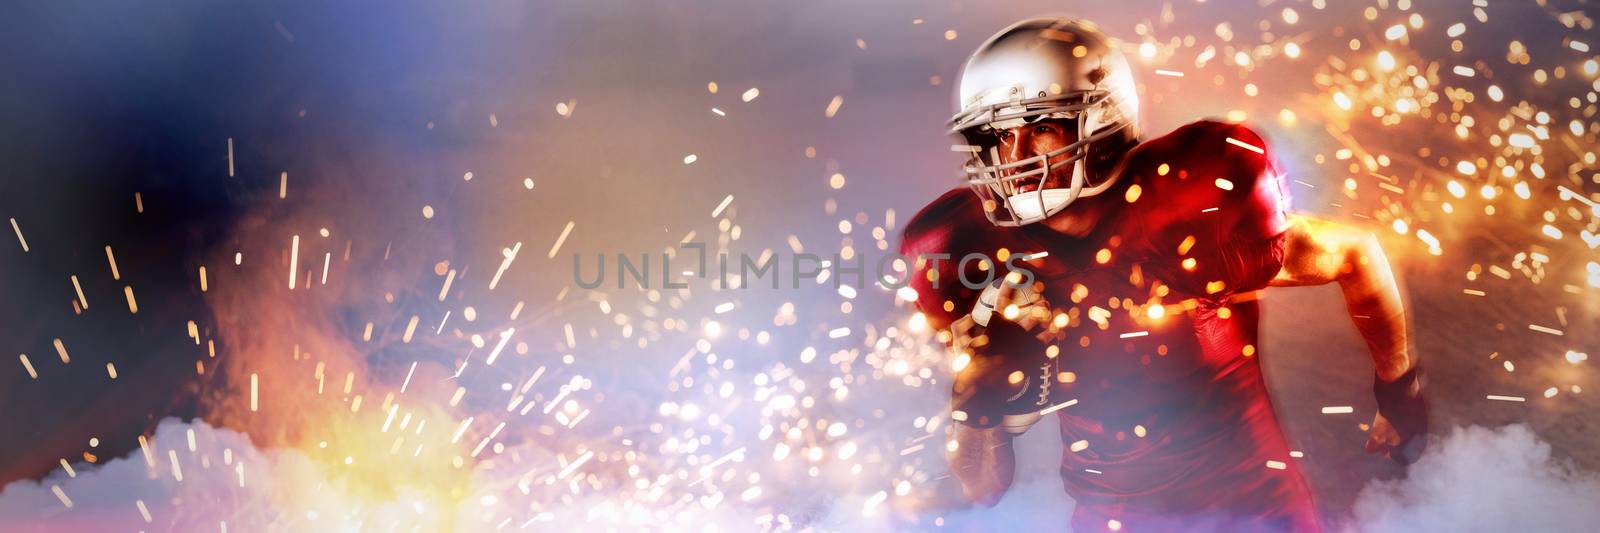 Determined American football player holding ball against firework bursting sparkle background